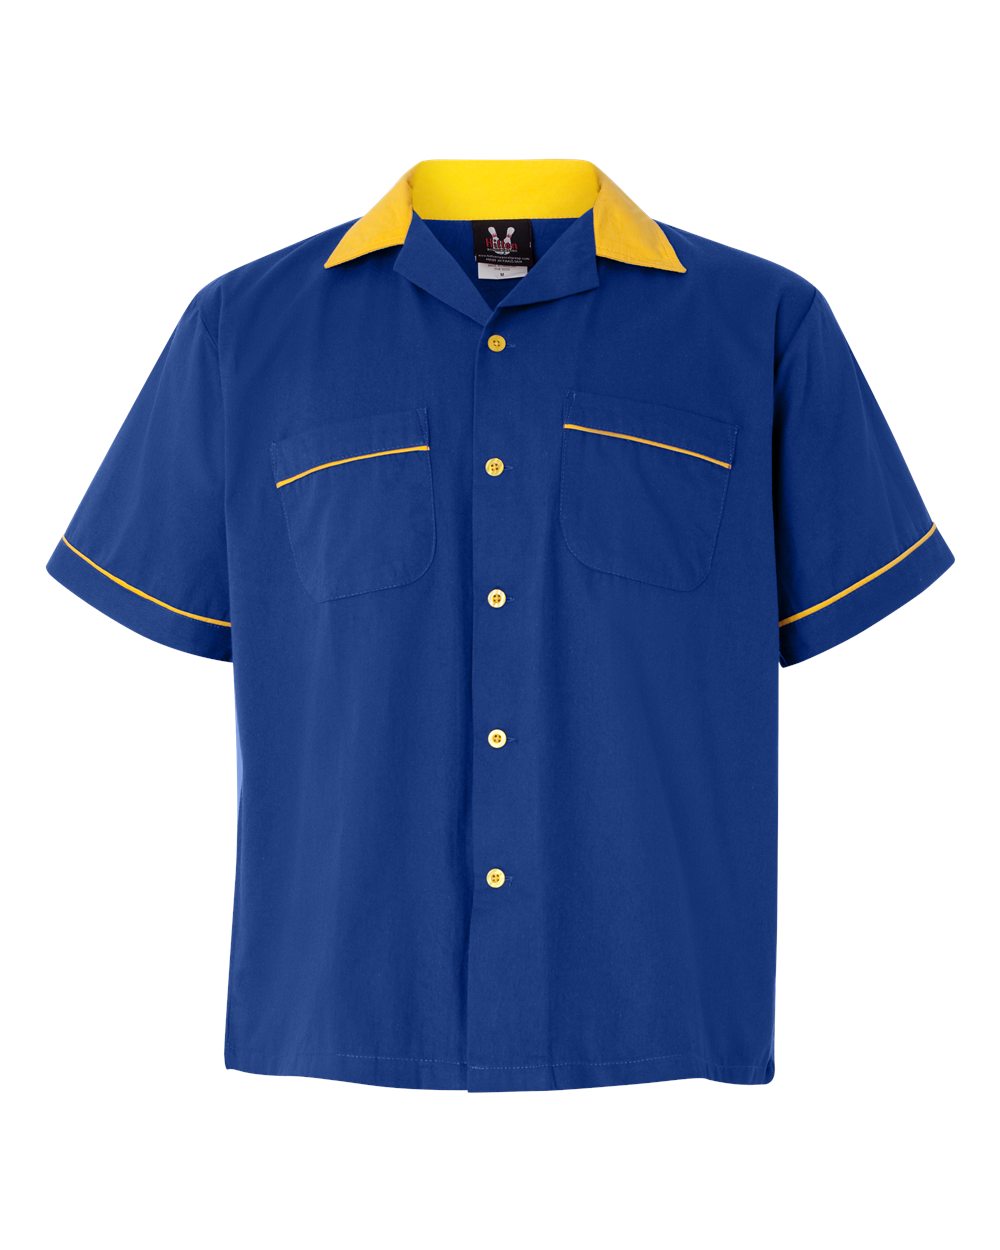 Hilton HP2244 Bowling Shirt Royal with Gold Trim Custom Text or Design